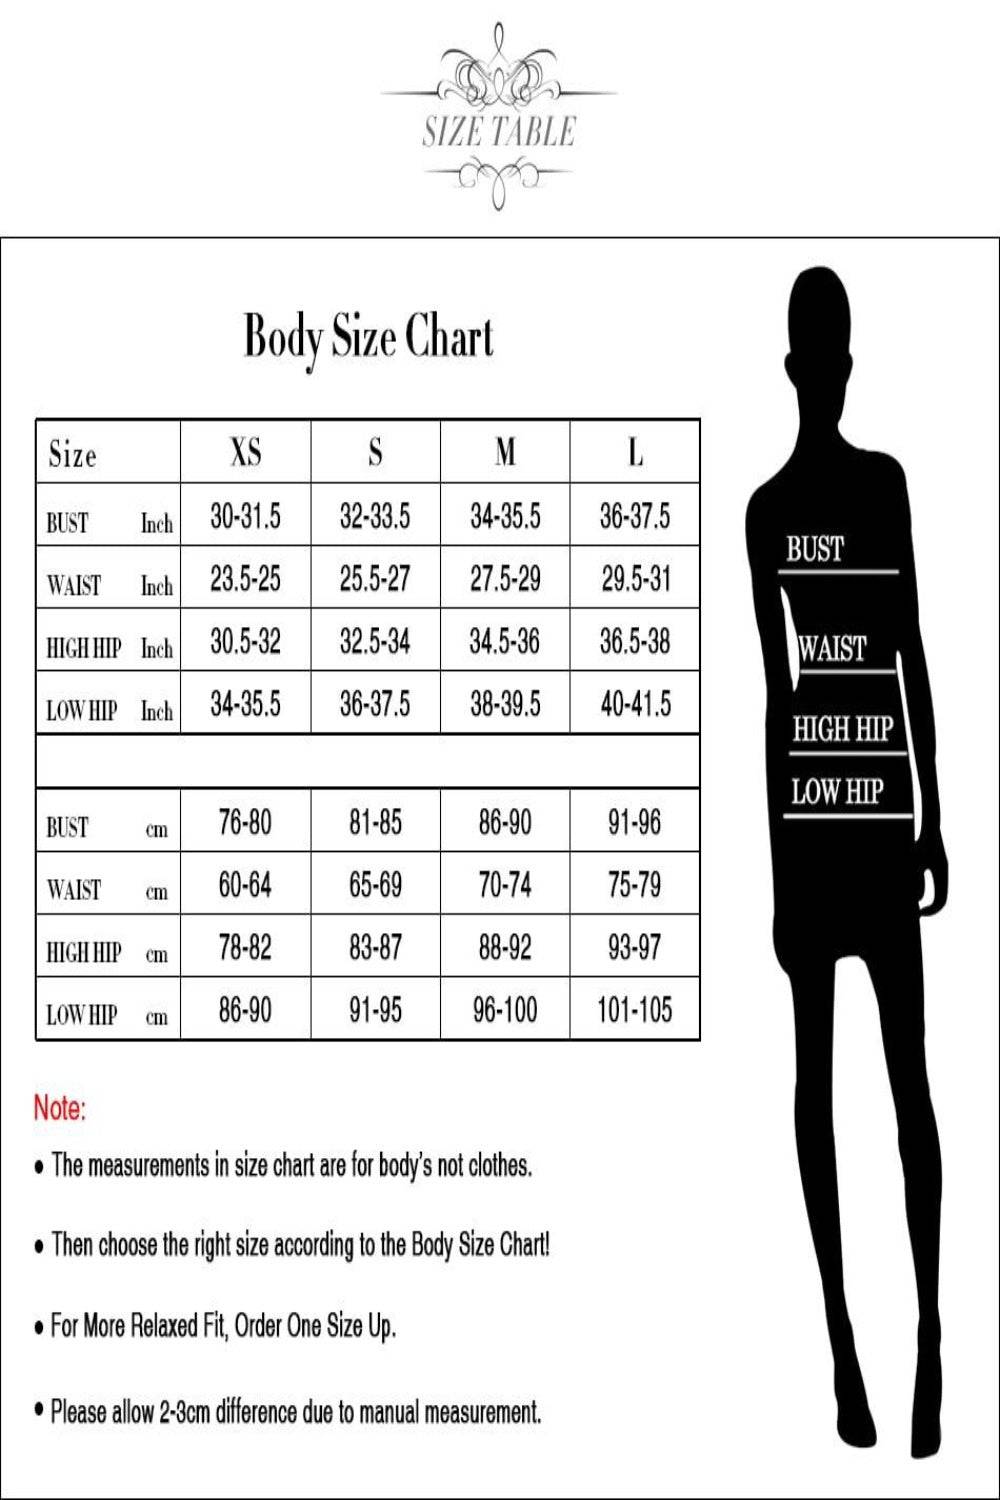 Body Contour Bustier Black Bodycon above knee Midi Dress - TGC Boutique - Bodycon Dress